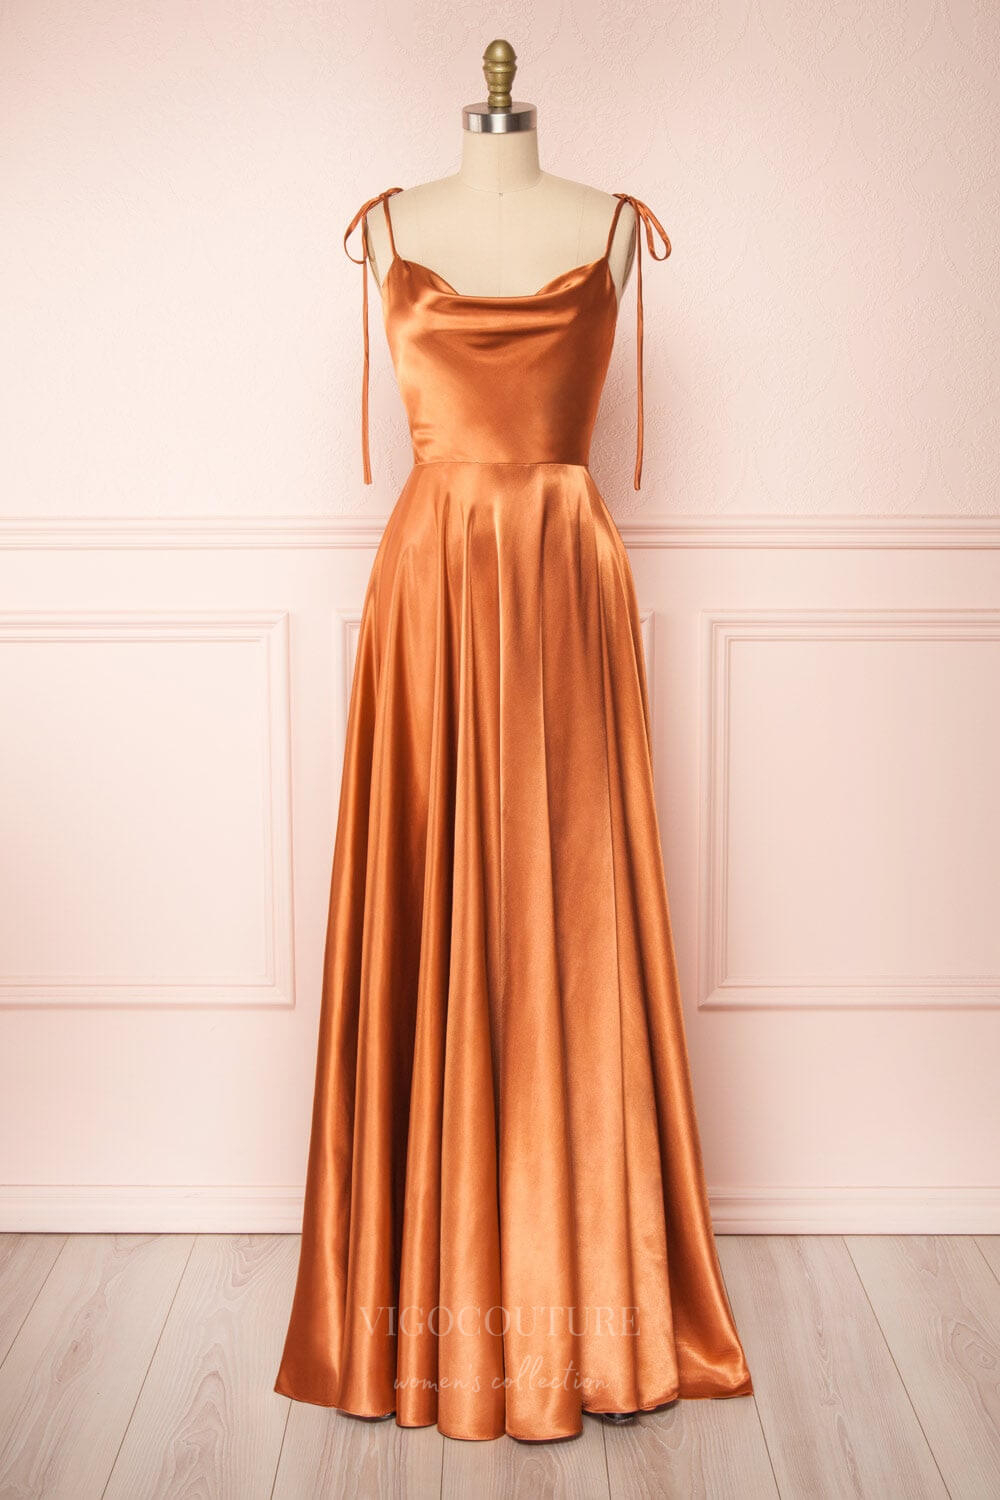 vigocouture-Burgundy Spaghetti Strap Prom Dress 20576-Prom Dresses-vigocouture-Orange-US2-